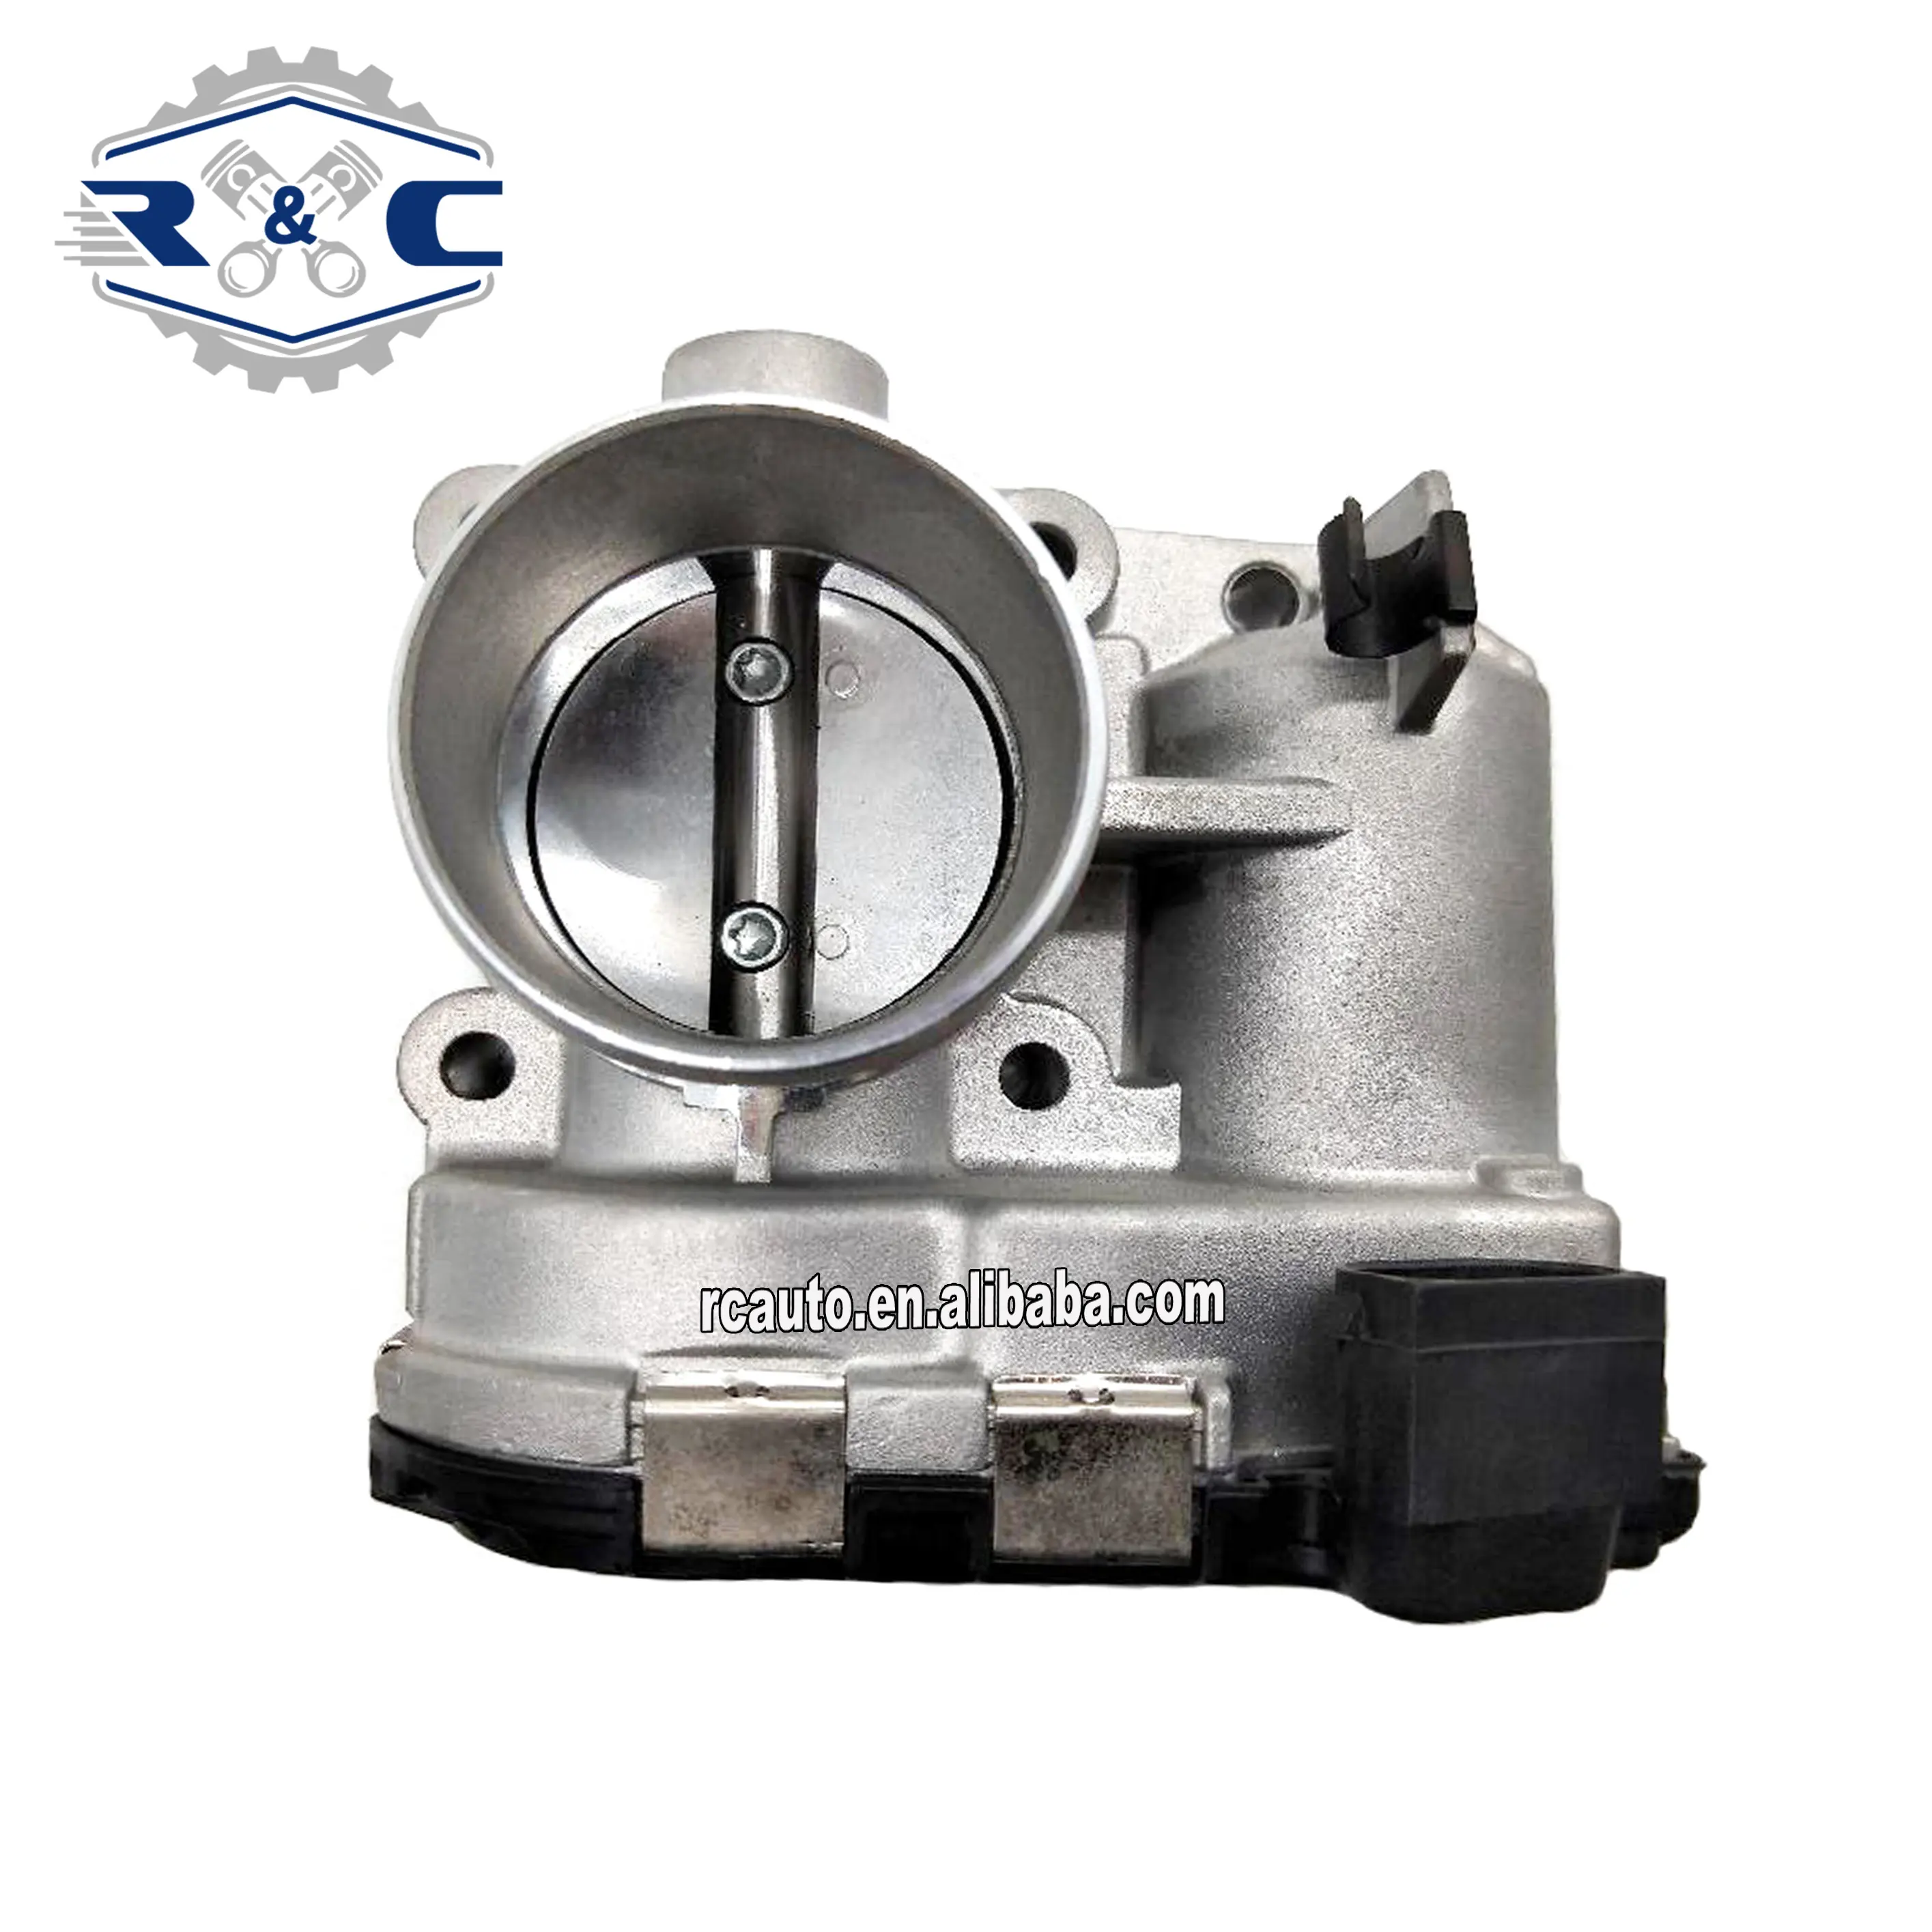 R&C High Quality Auto throttling valve engine system 0280750137 for BUS 137 FIAT PUNTO 500L car throttle body